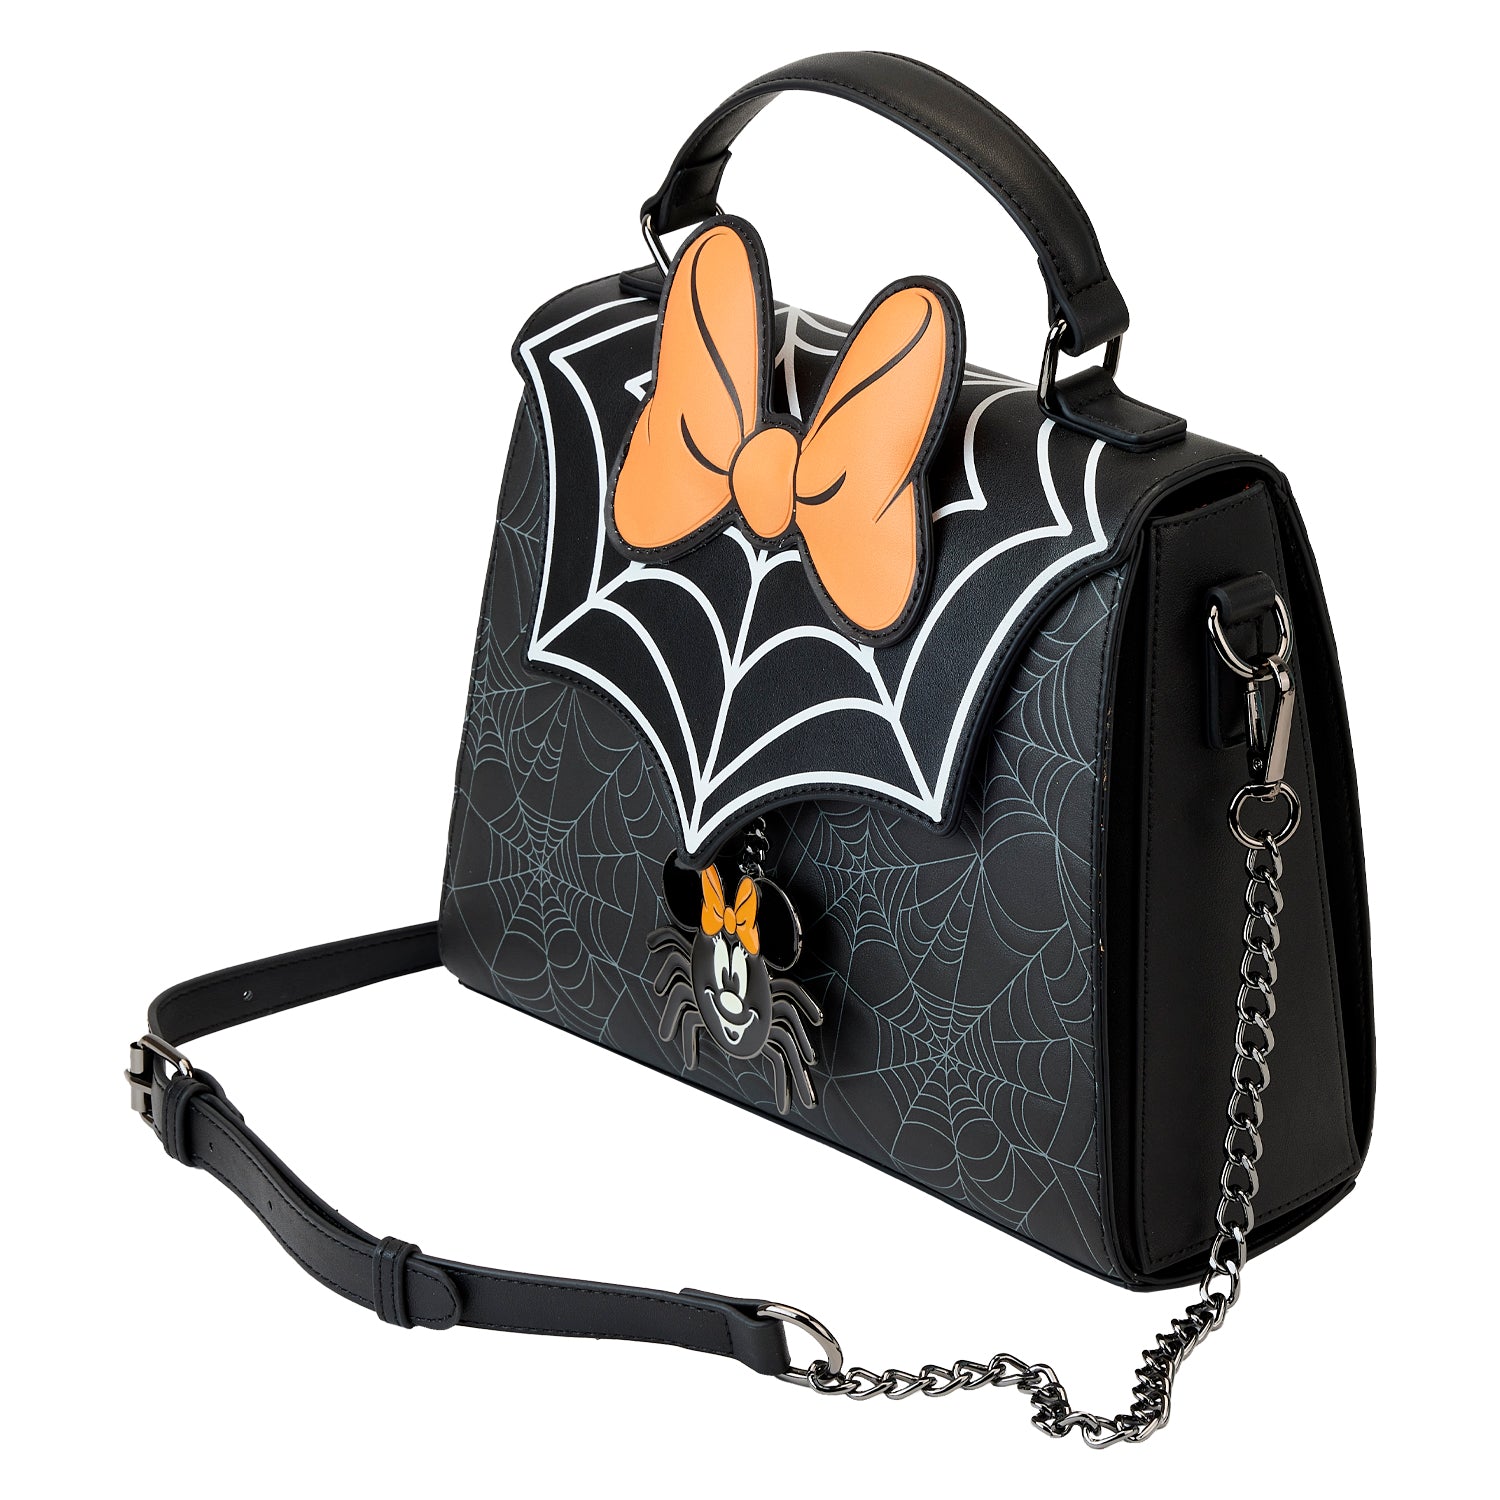 Buy purse Disney Parks Pixar Ball Sequin Crossbody Bag Purse at Amazon.in